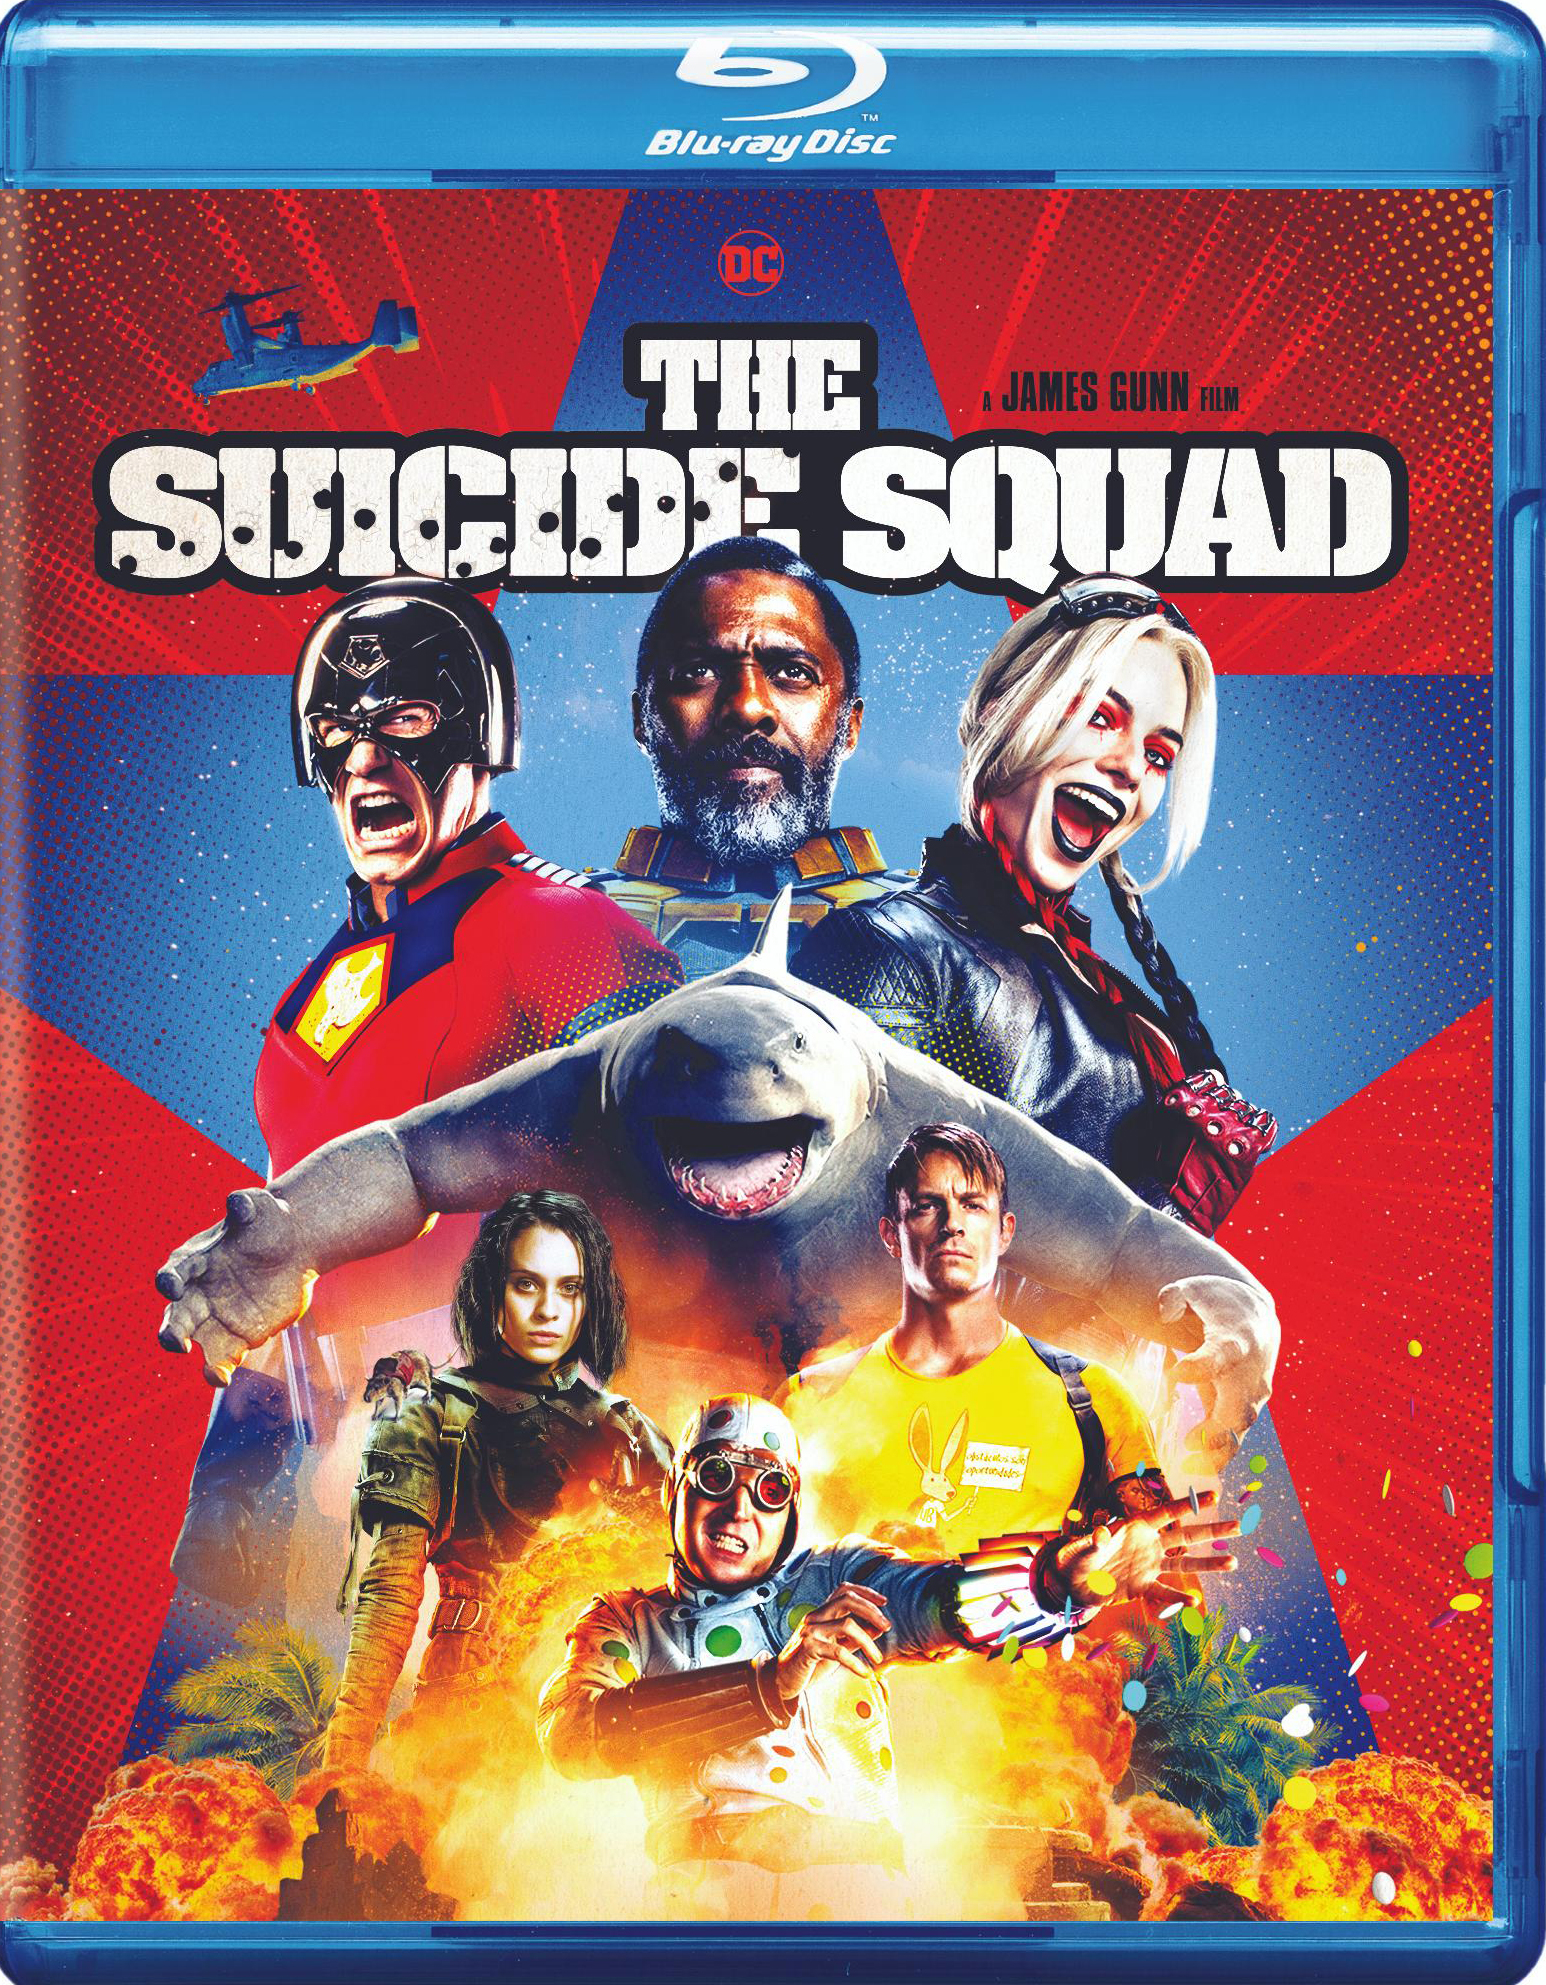 Suicide Squad movie review & film summary (2016)